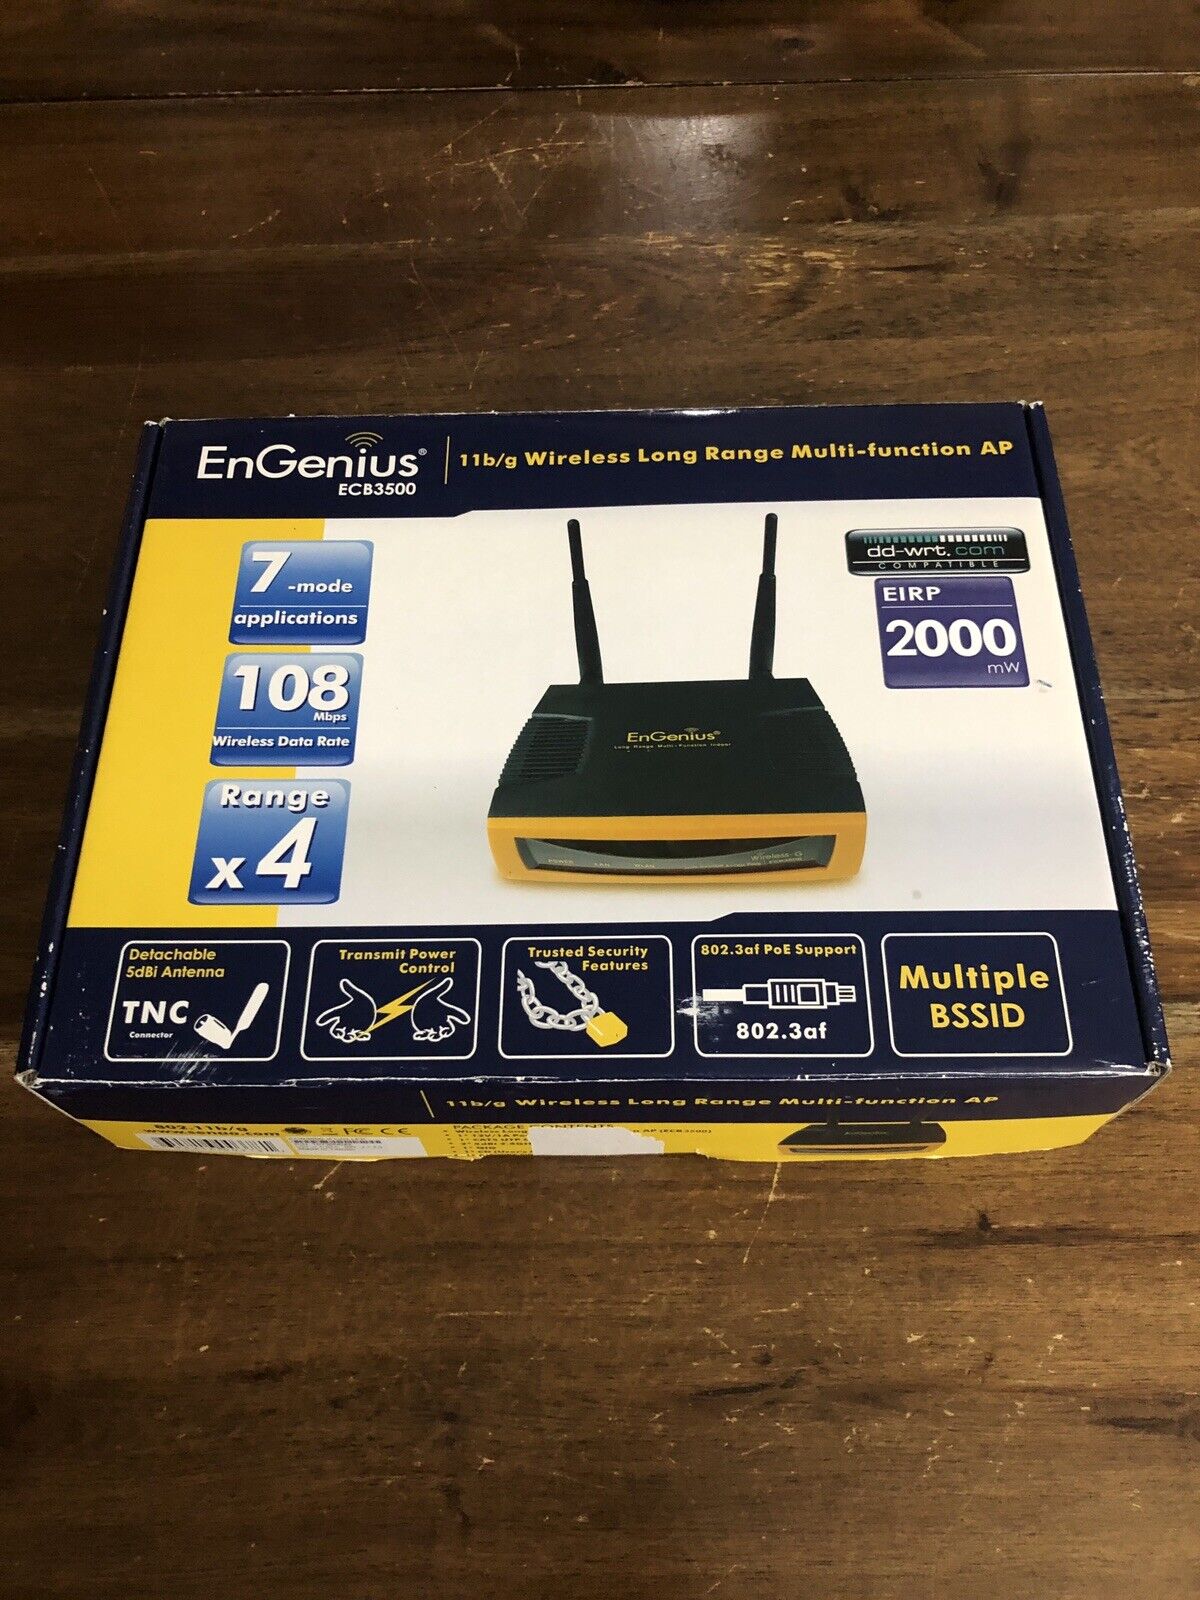 EnGenius ECB-3500 108 Mbps 7 Mode Apps Range X 4 Wireless G Router Open Box.